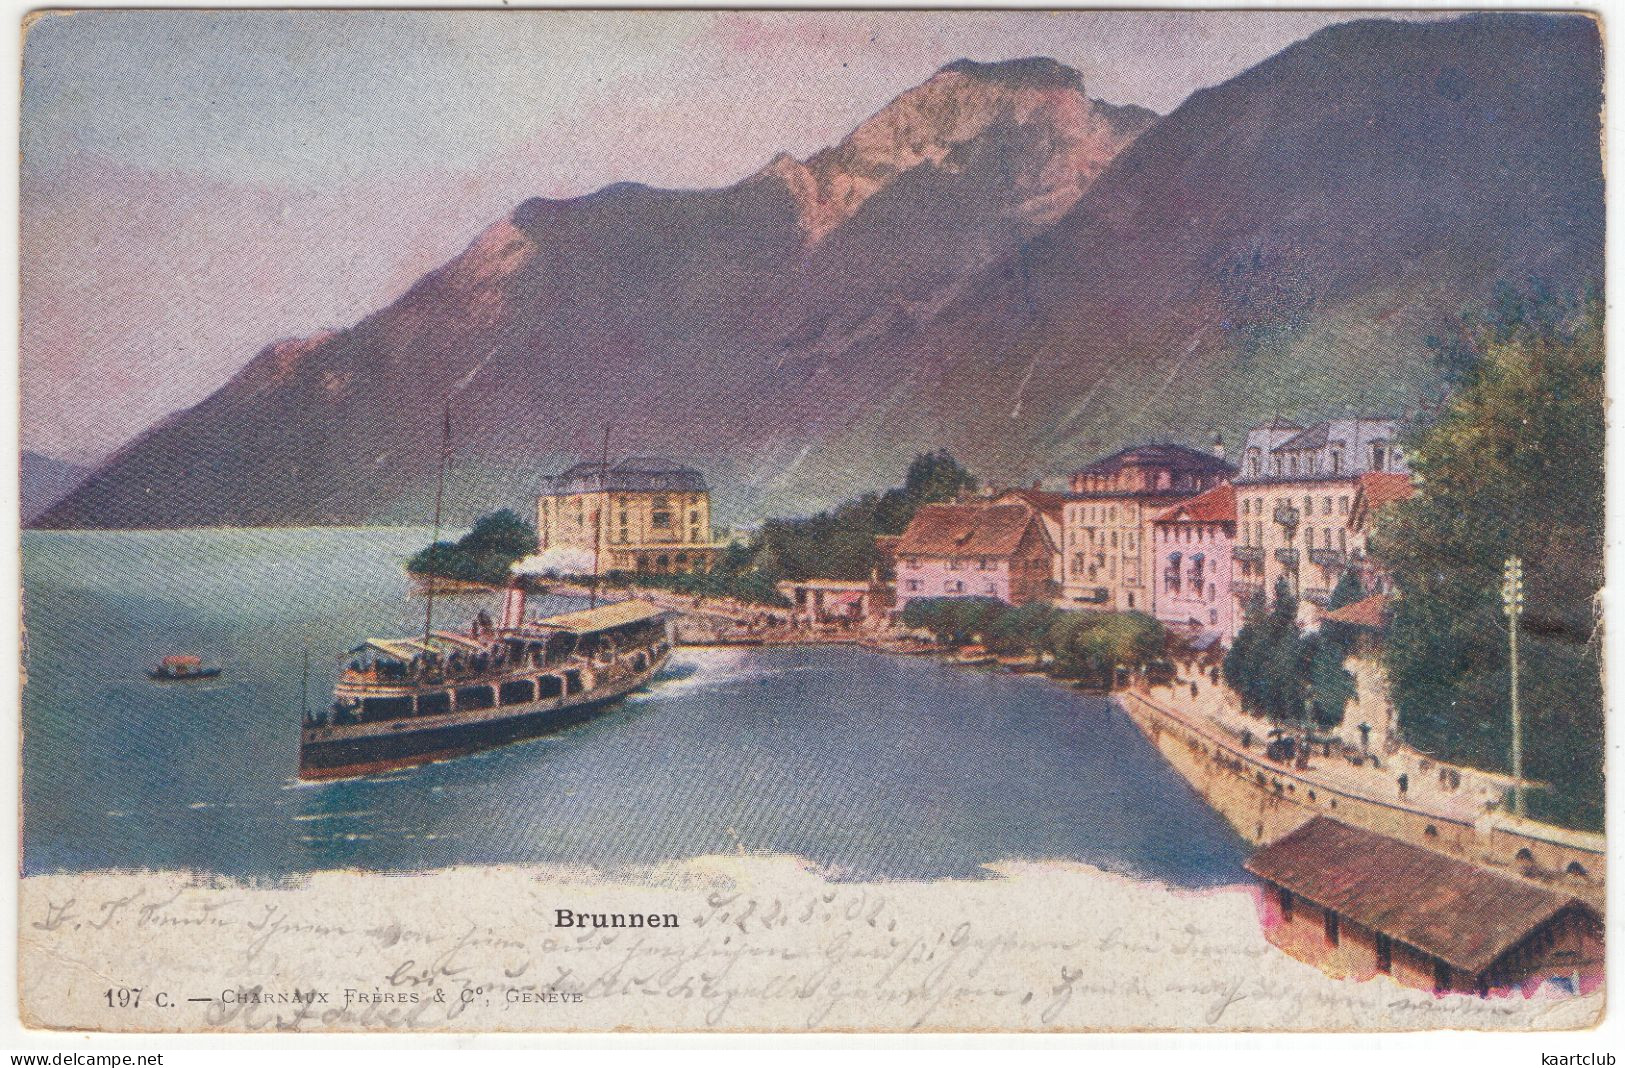 197 C.  Brunnen  - (Schweiz/Suisse/Switzerland) - 1902 - Dampfer - (Charnaux Frères & Co., Genève) - Ingenbohl